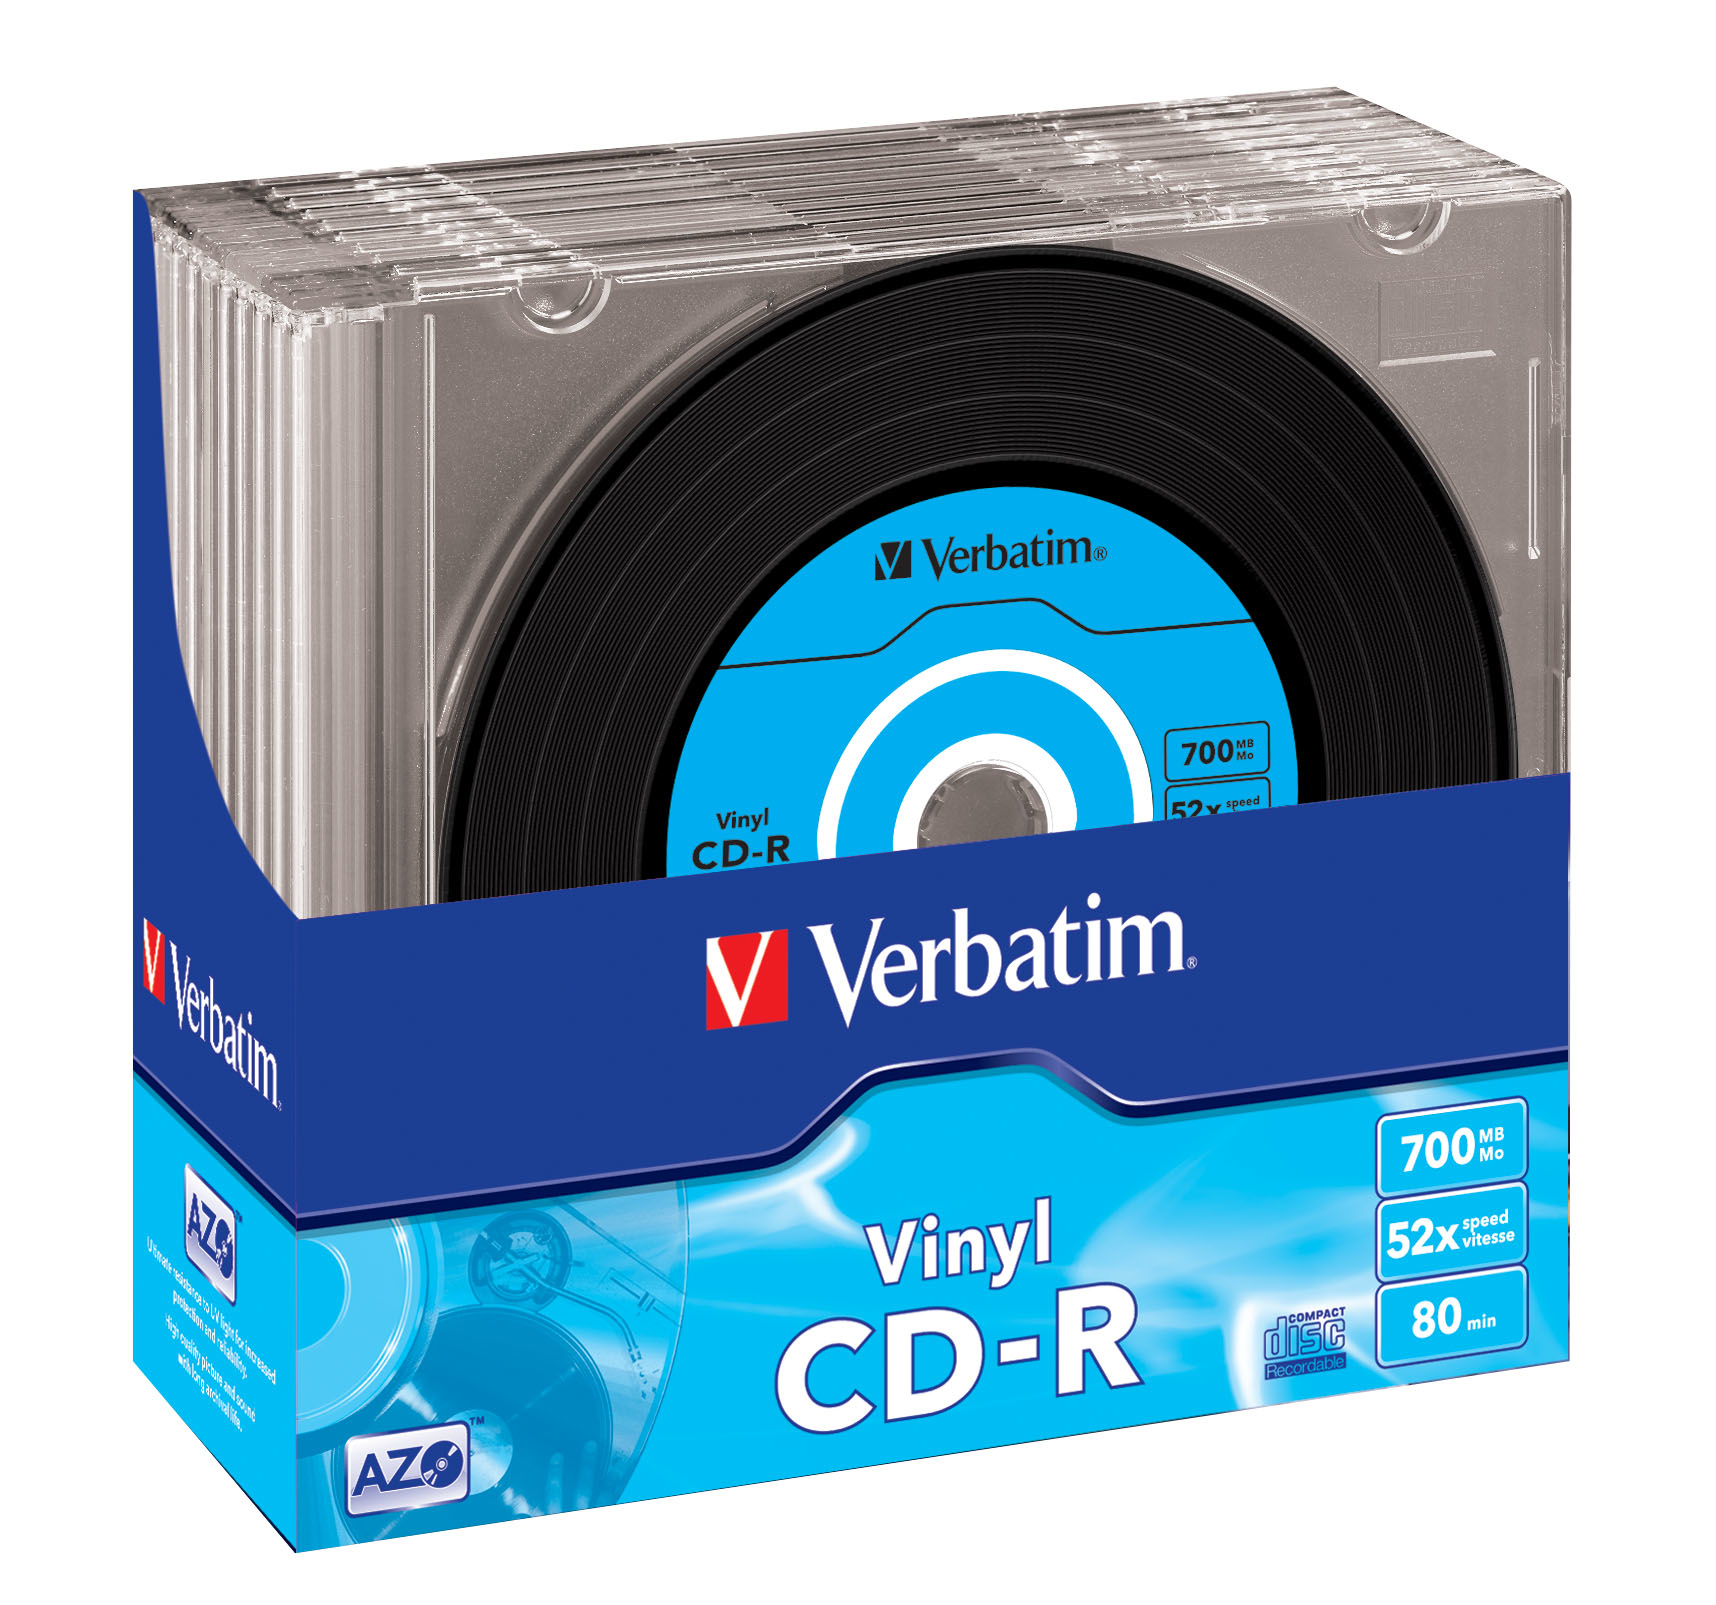 CD-R Verbatim 700MB 10pcs Pack 52x SlimCase vinyl retail